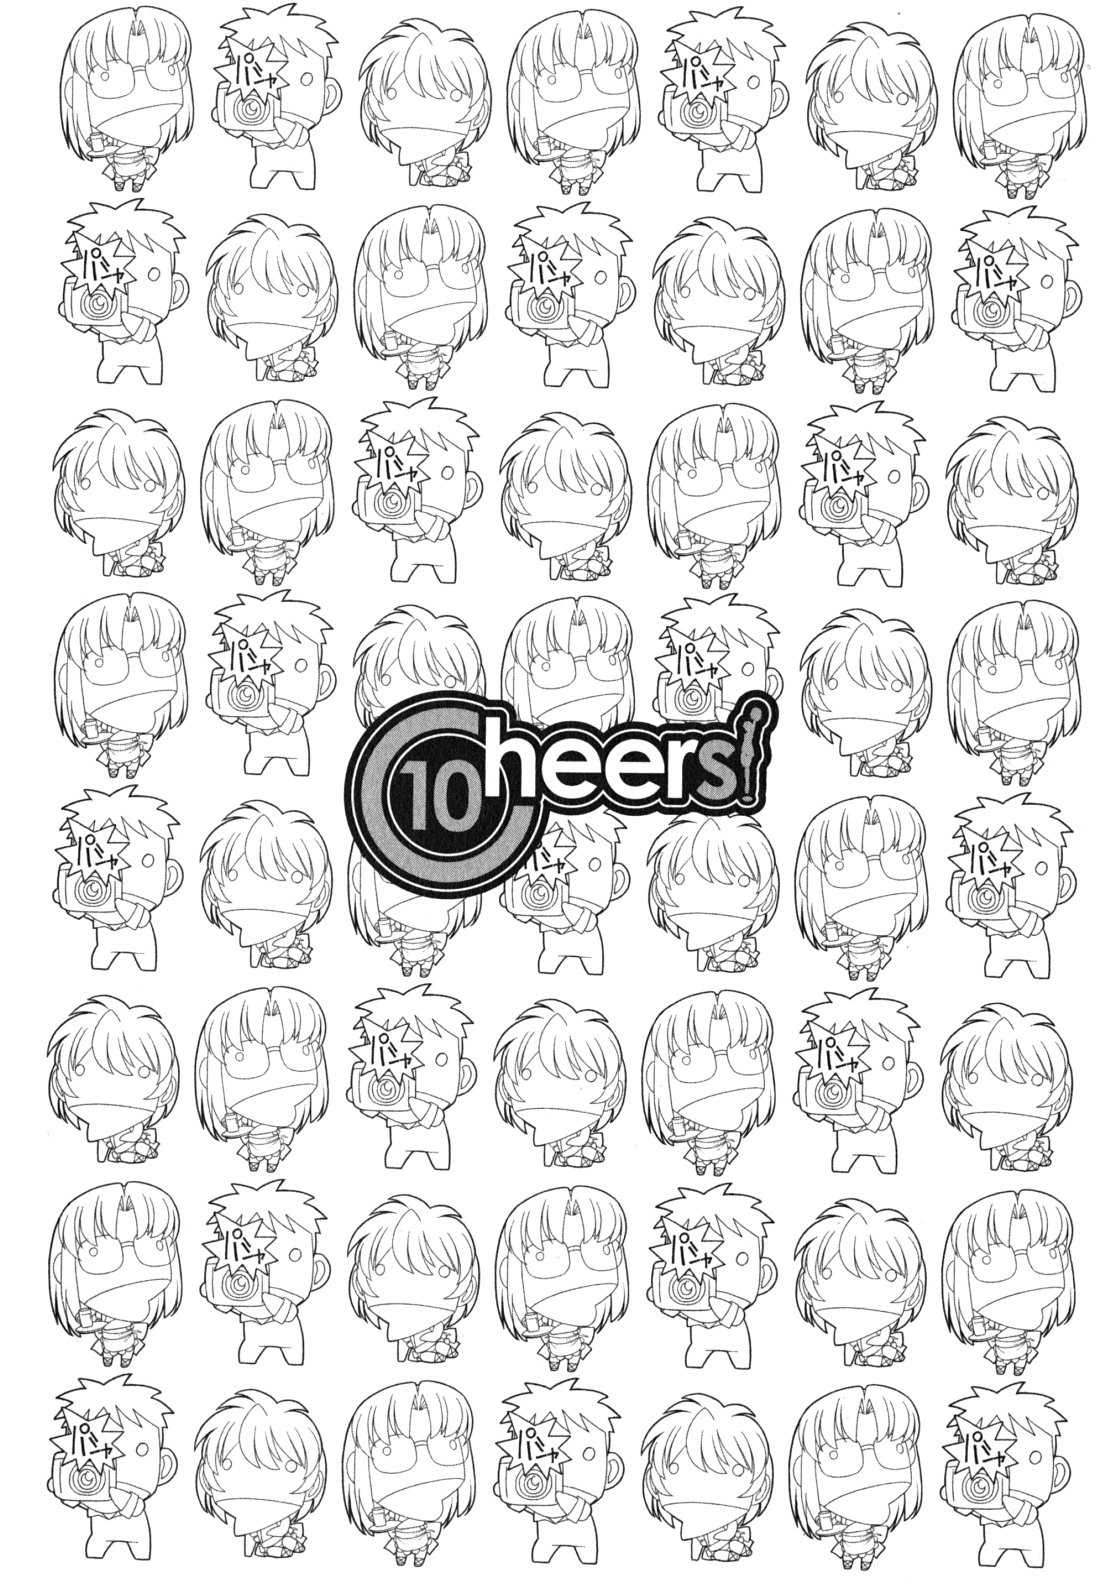 [Charlie Nishinaka] Cheers! Vol.10 [チャーリーにしなか] Cheers！ 第10巻